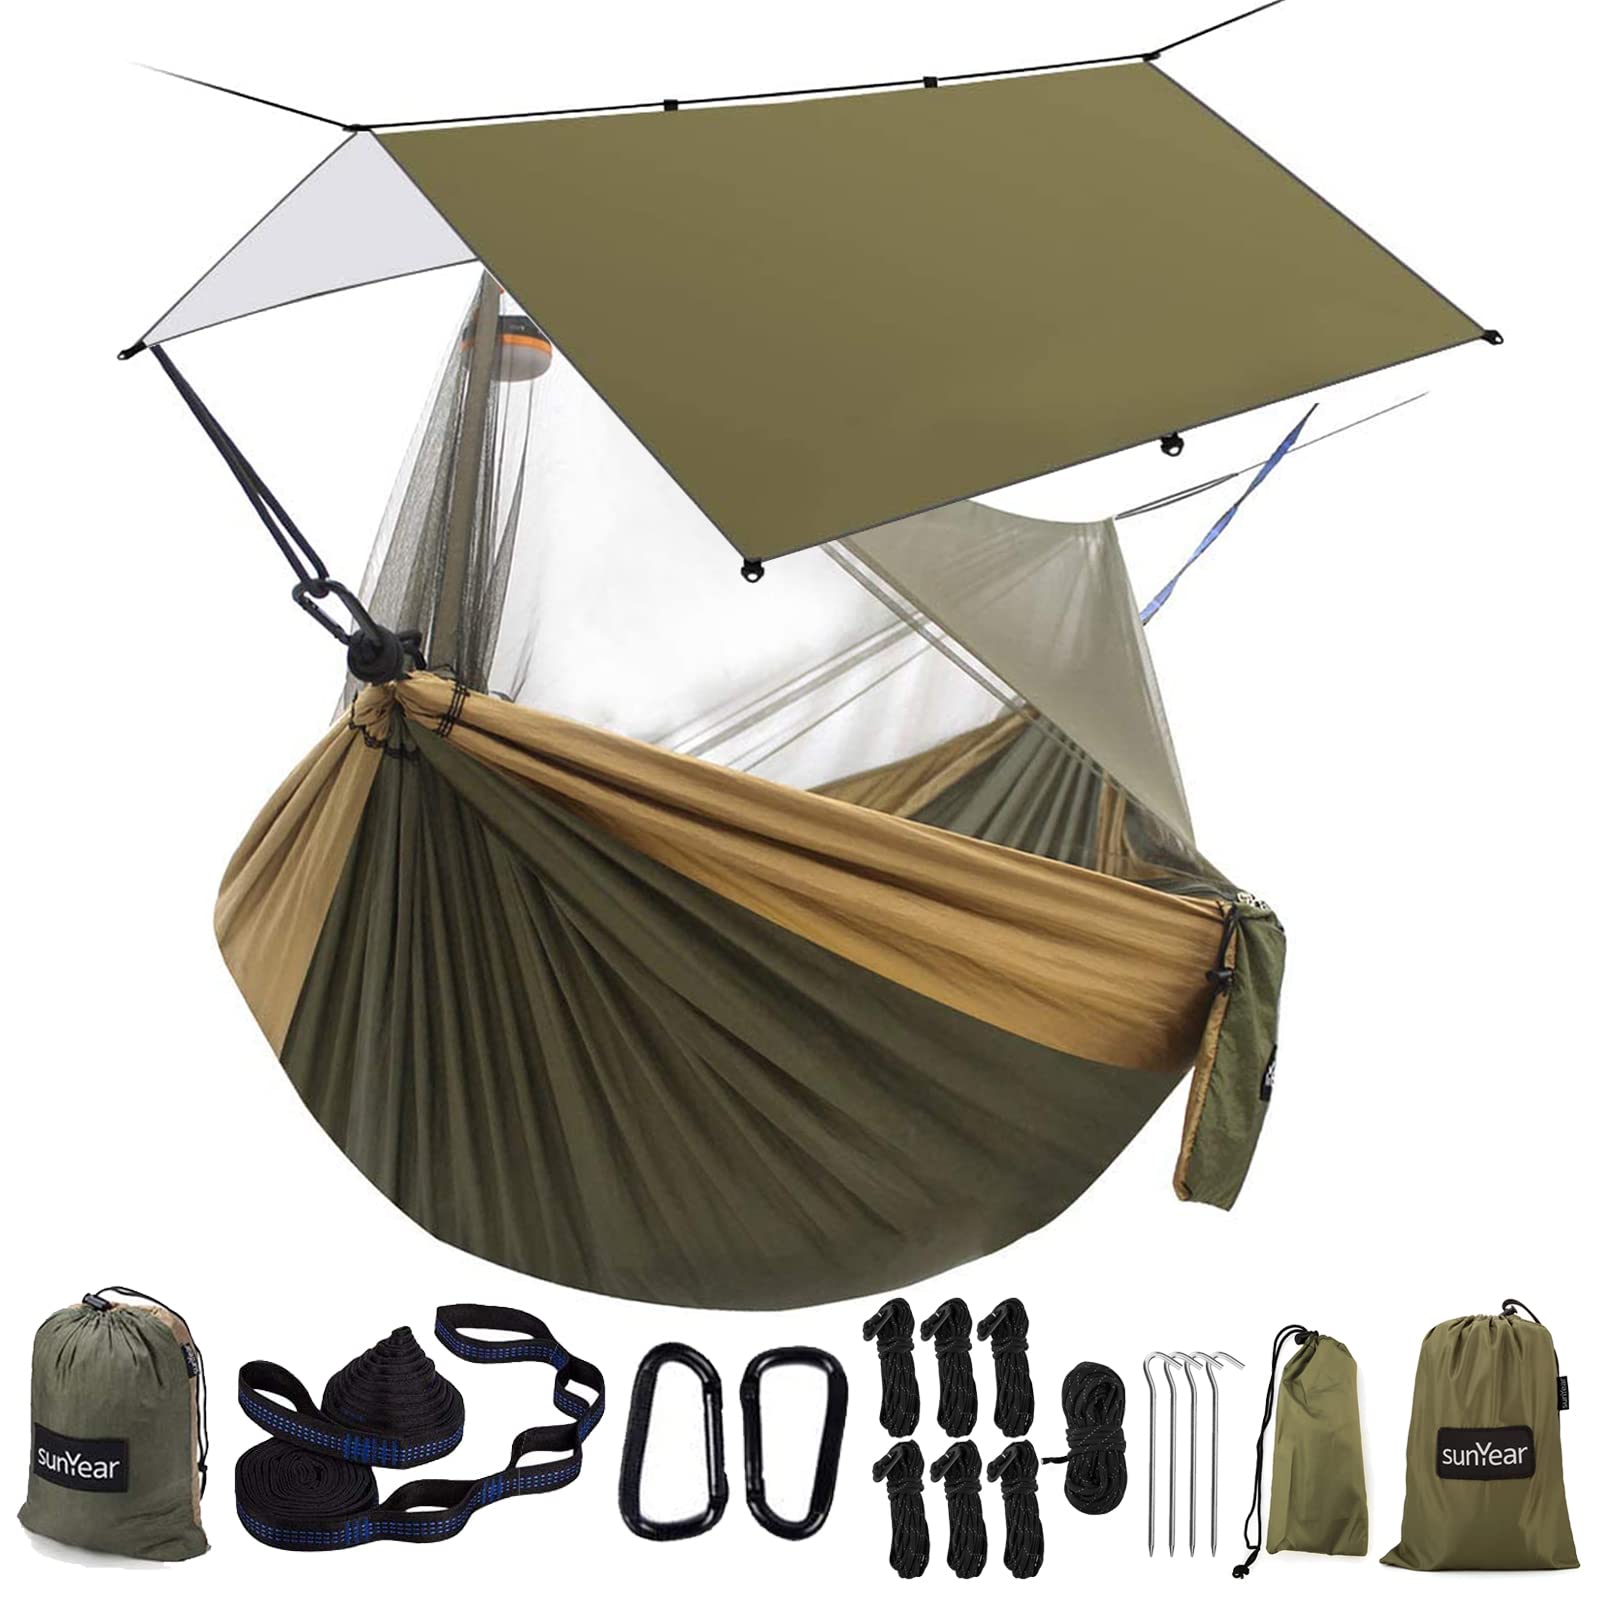 Sunyear Hammock Camping with Rain Fly Tarp and Net, Portable Camping Hammock Double Tree Hammock Outdoor Indoor Backpacking Trav